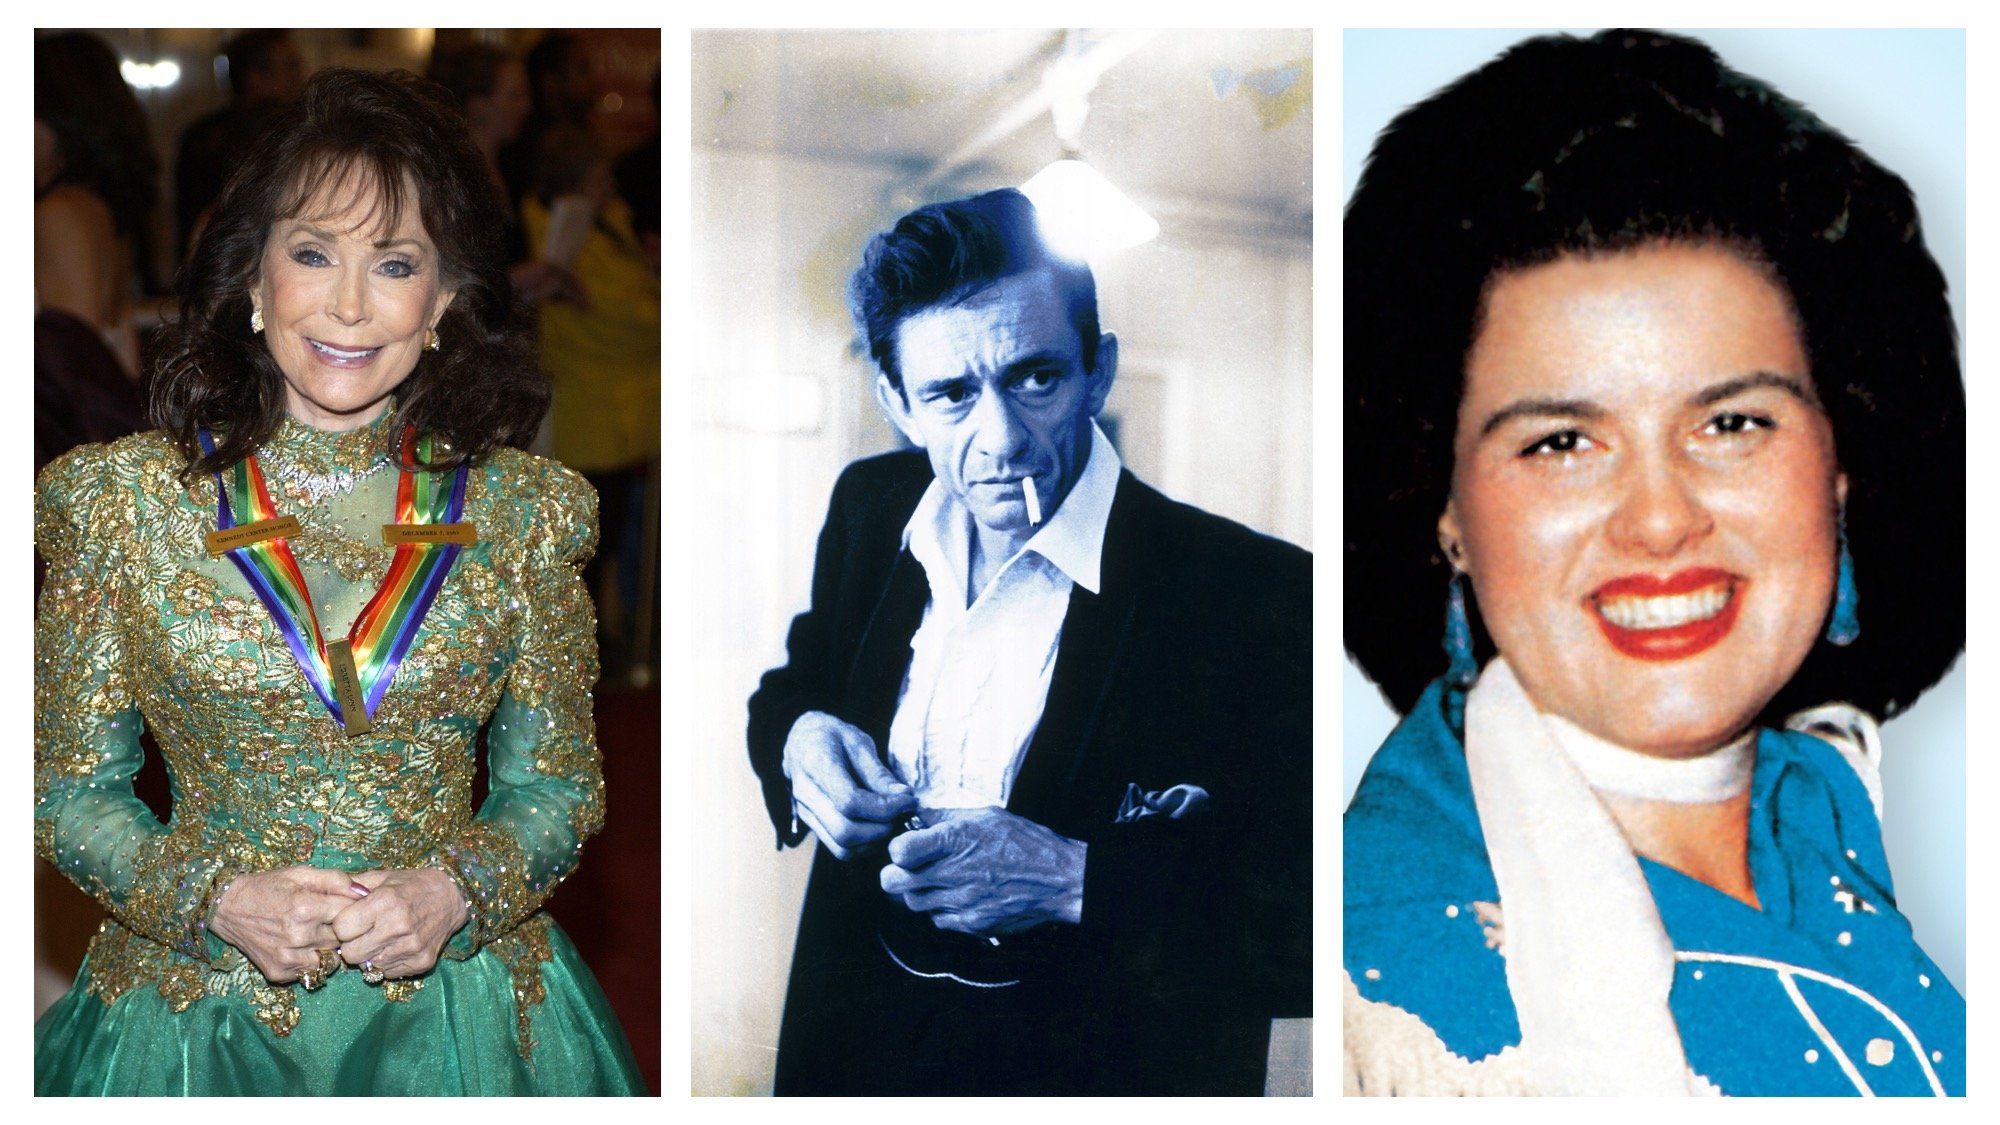 (L) Loretta Lynn c. 2003 (C) Johnny Cash c. 1966 (R) Patsy Cline c. 1960